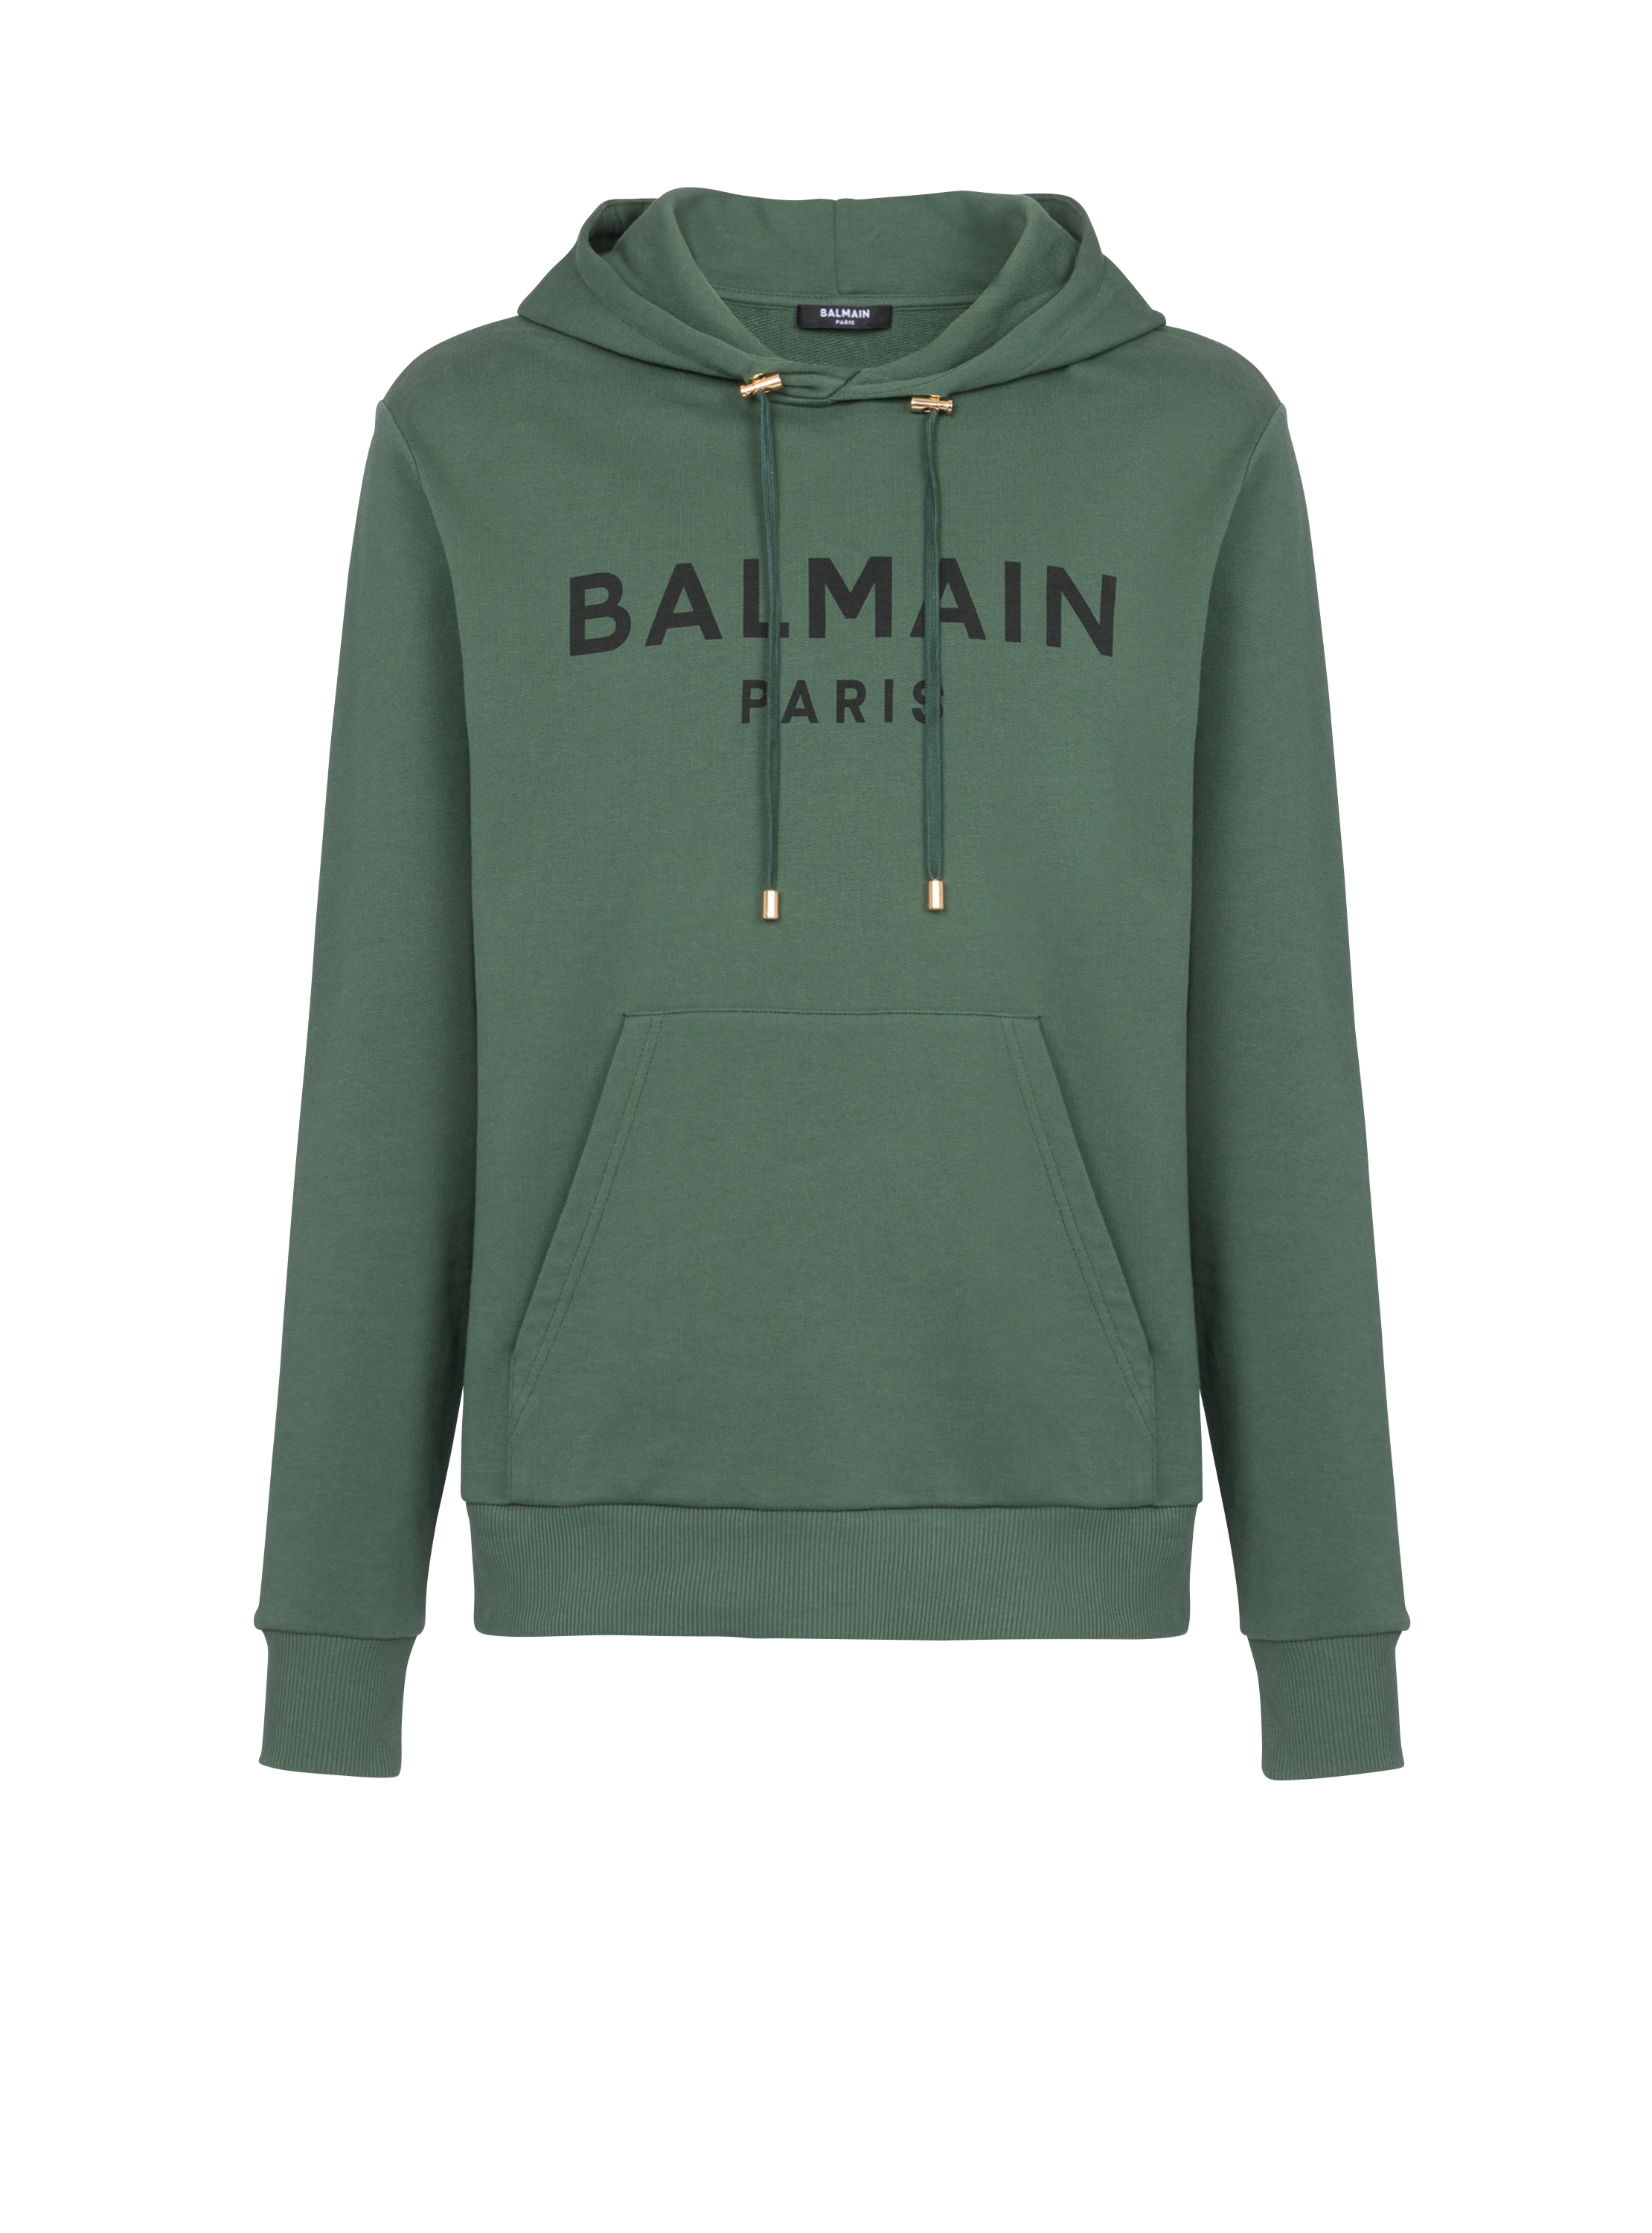 umoral boble forbinde Hooded cotton sweatshirt with Balmain Paris logo print green - Men | BALMAIN